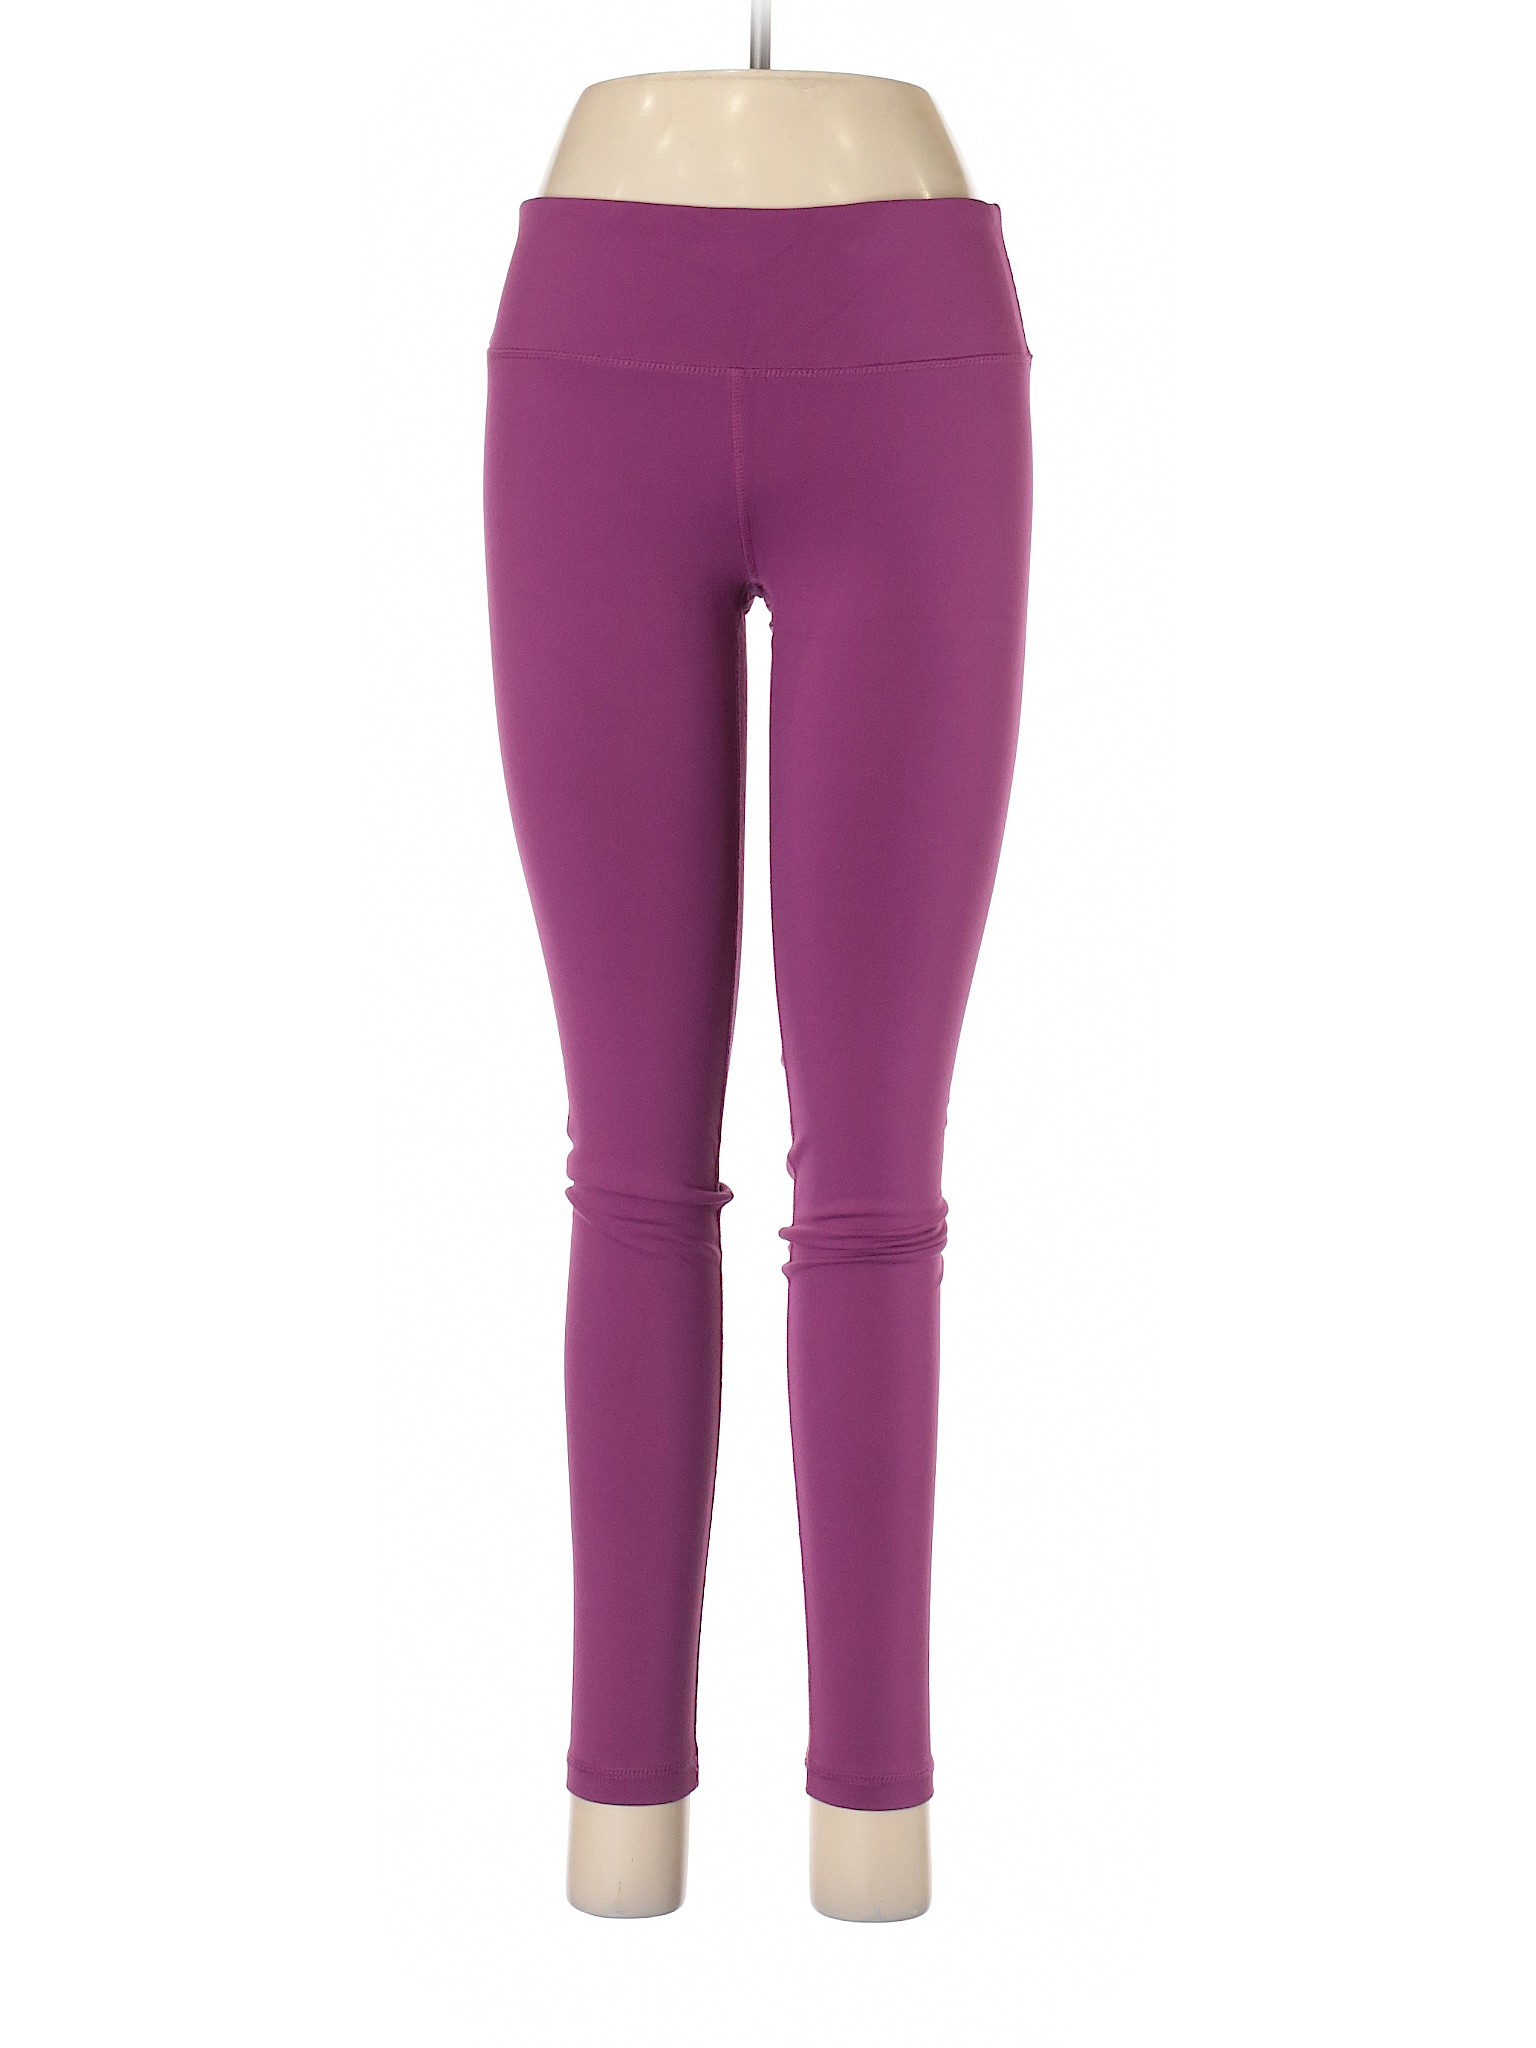 90 Degree by Reflex Women Purple Active Pants M | eBay